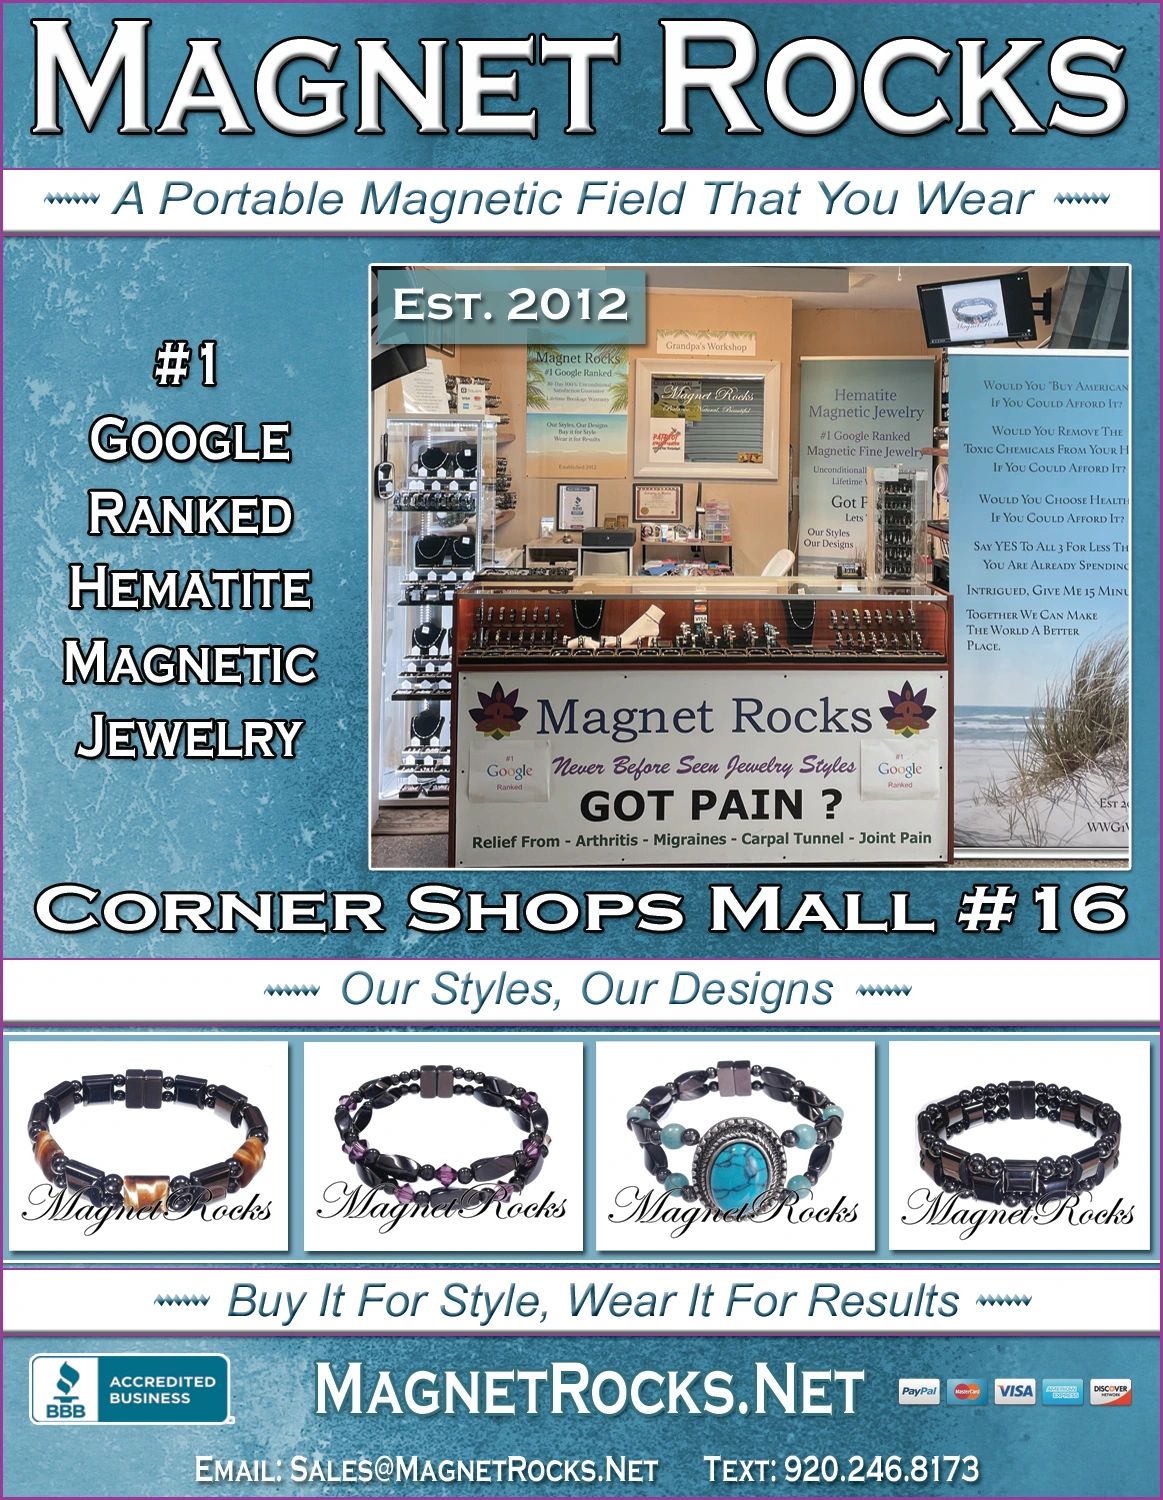 Magnet Rocks advertisement.